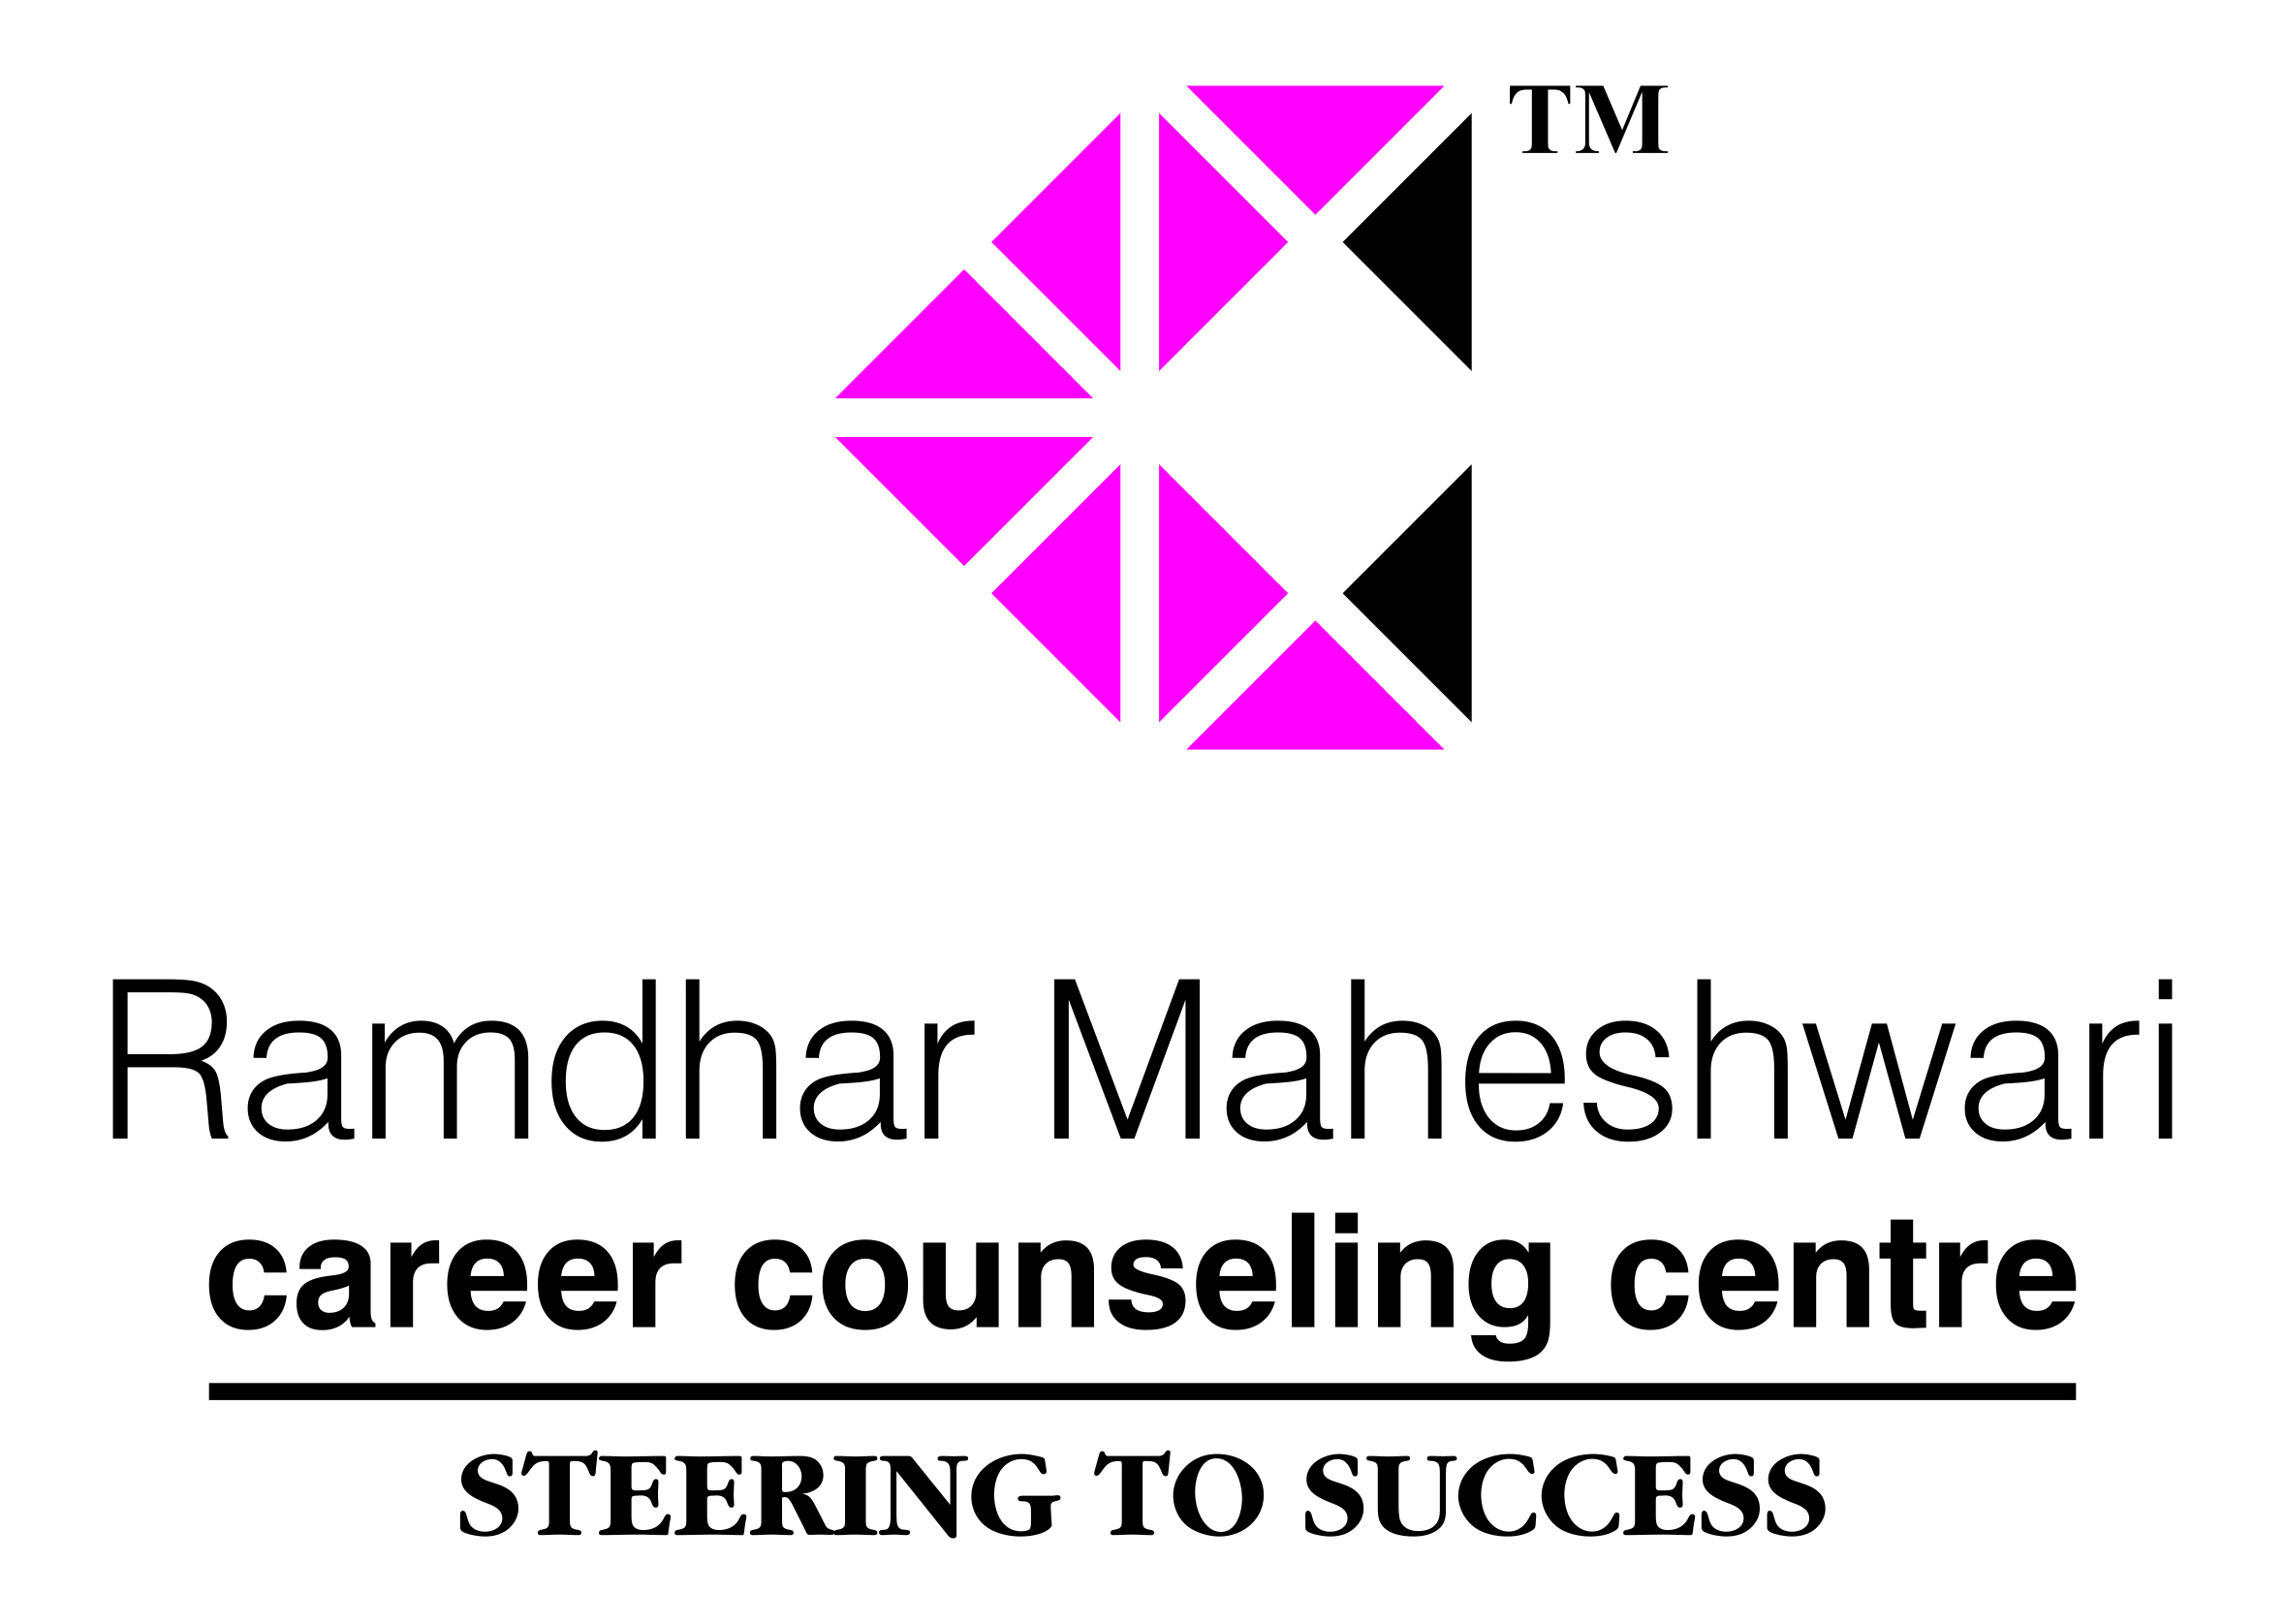 ramdhar maheshwari career counseling center | counselor in mumbai